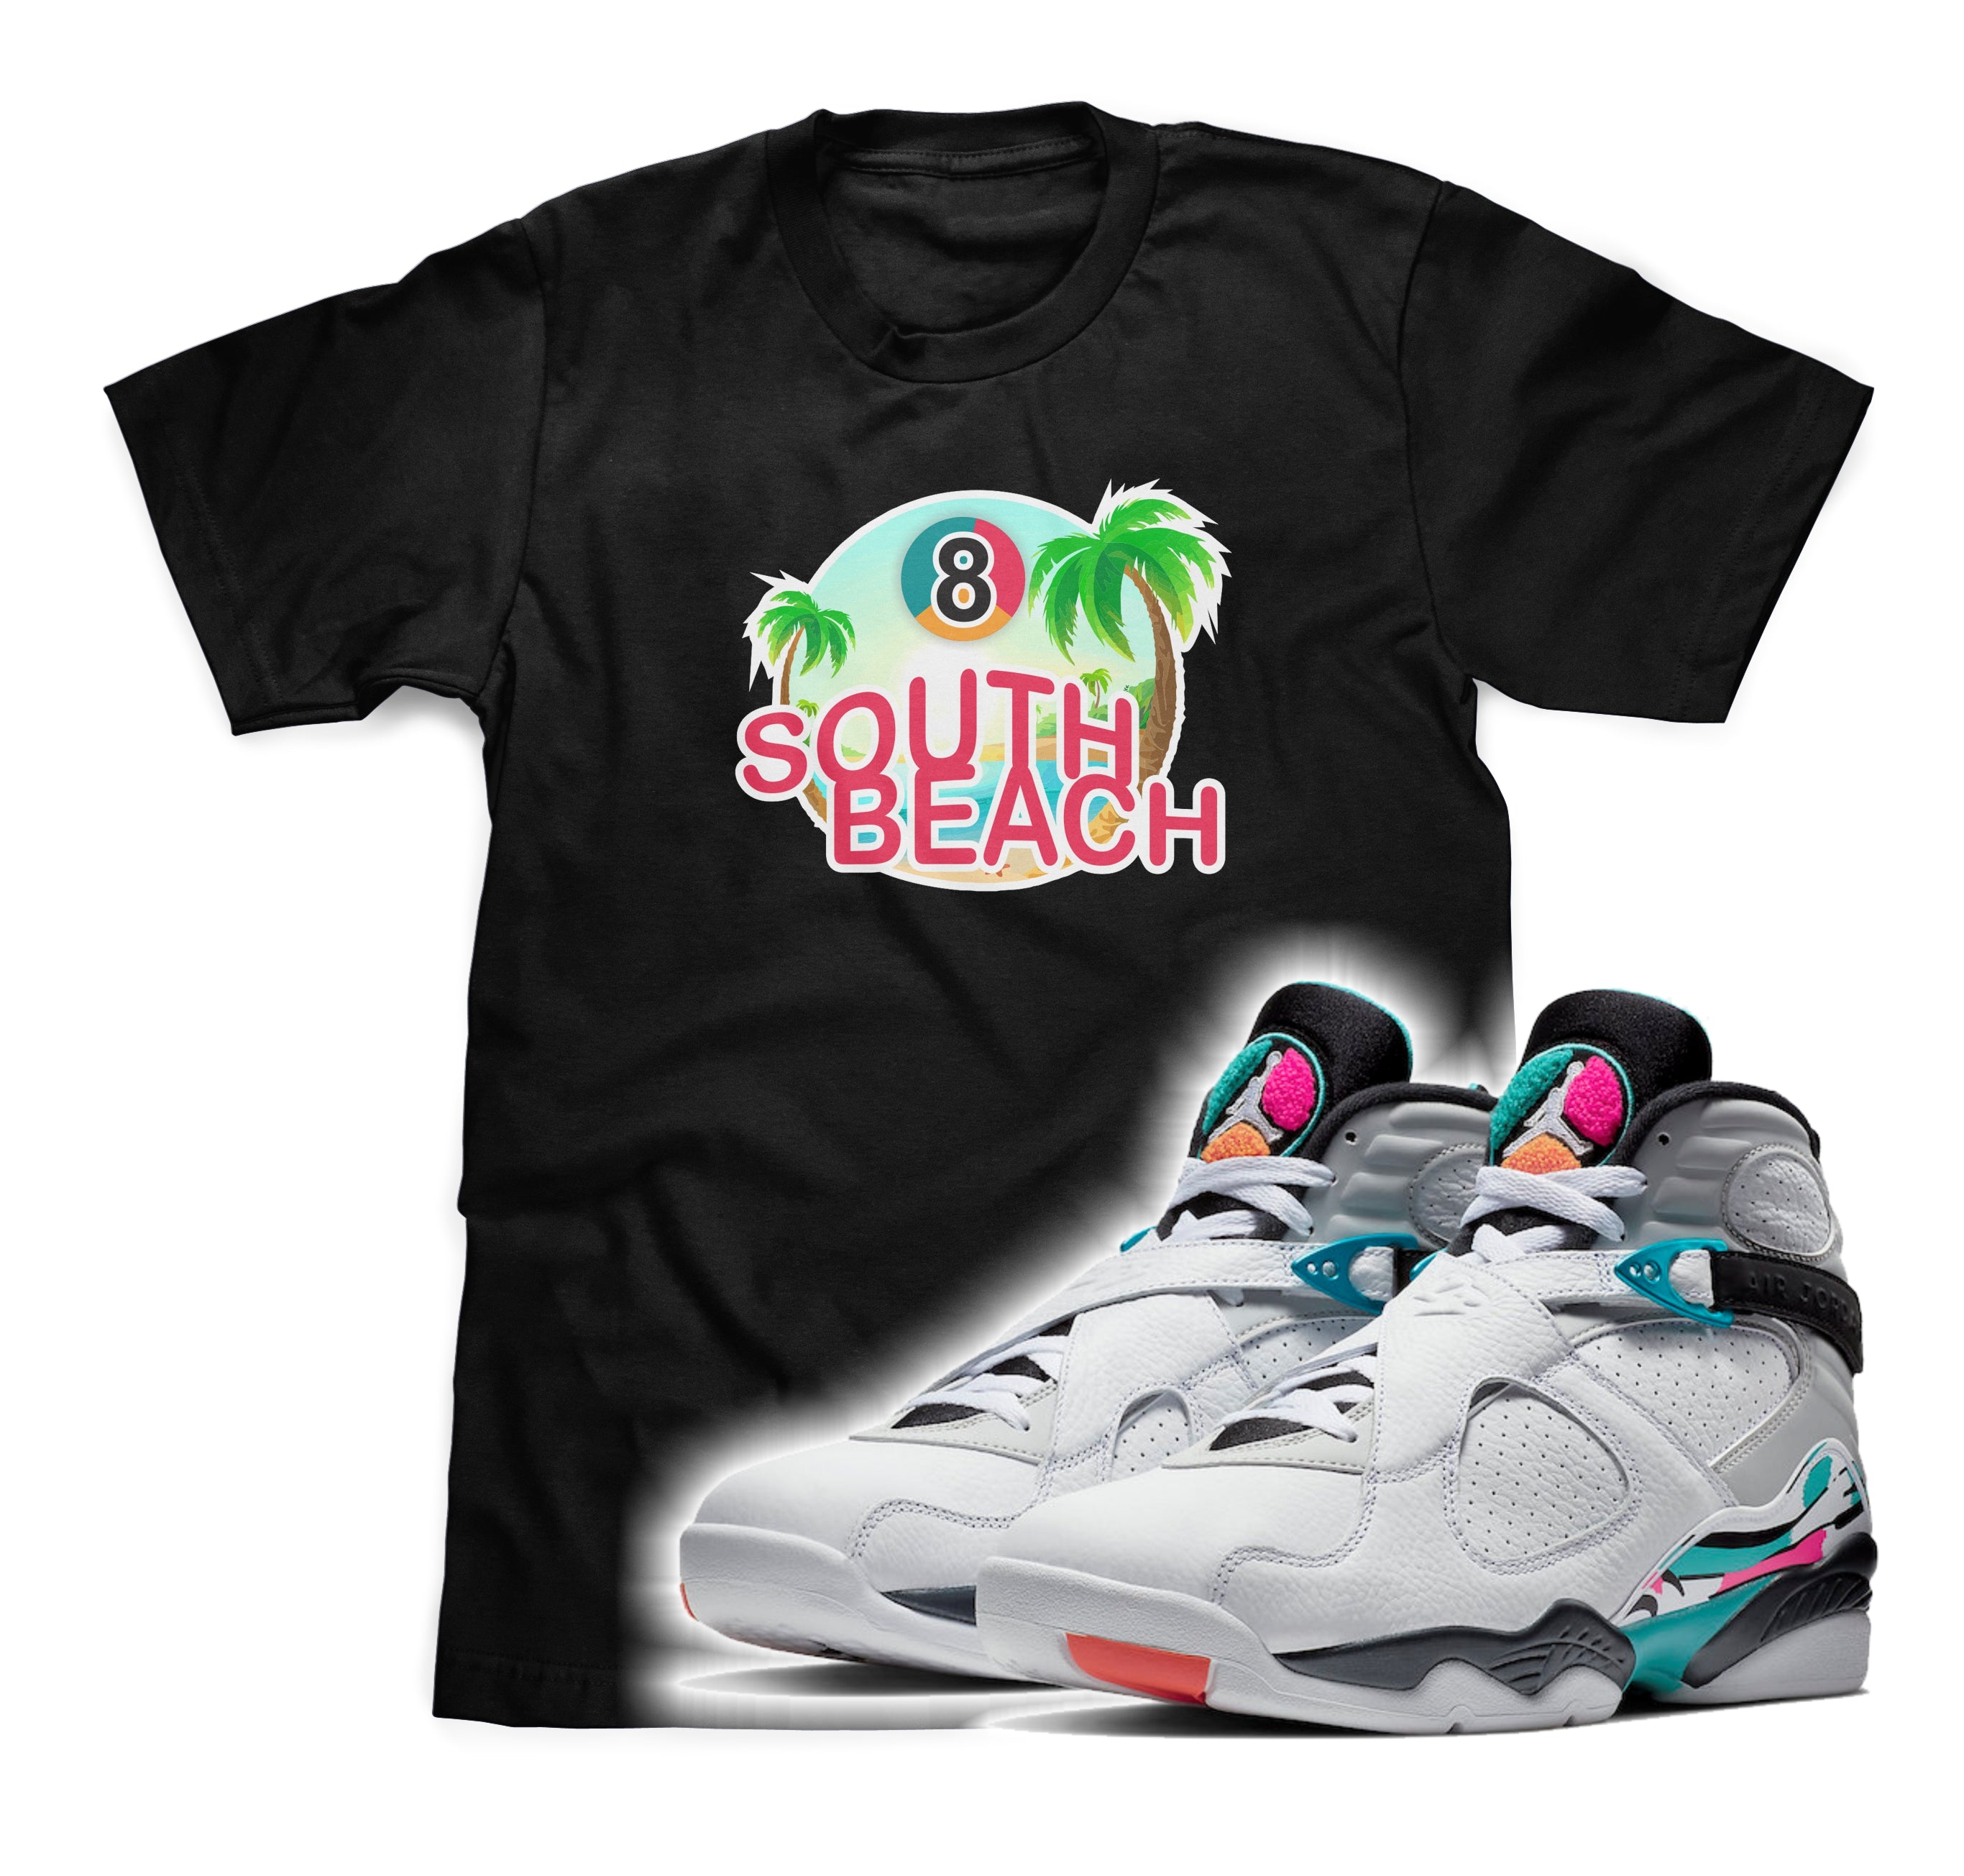 jordan 8 south beach shirt